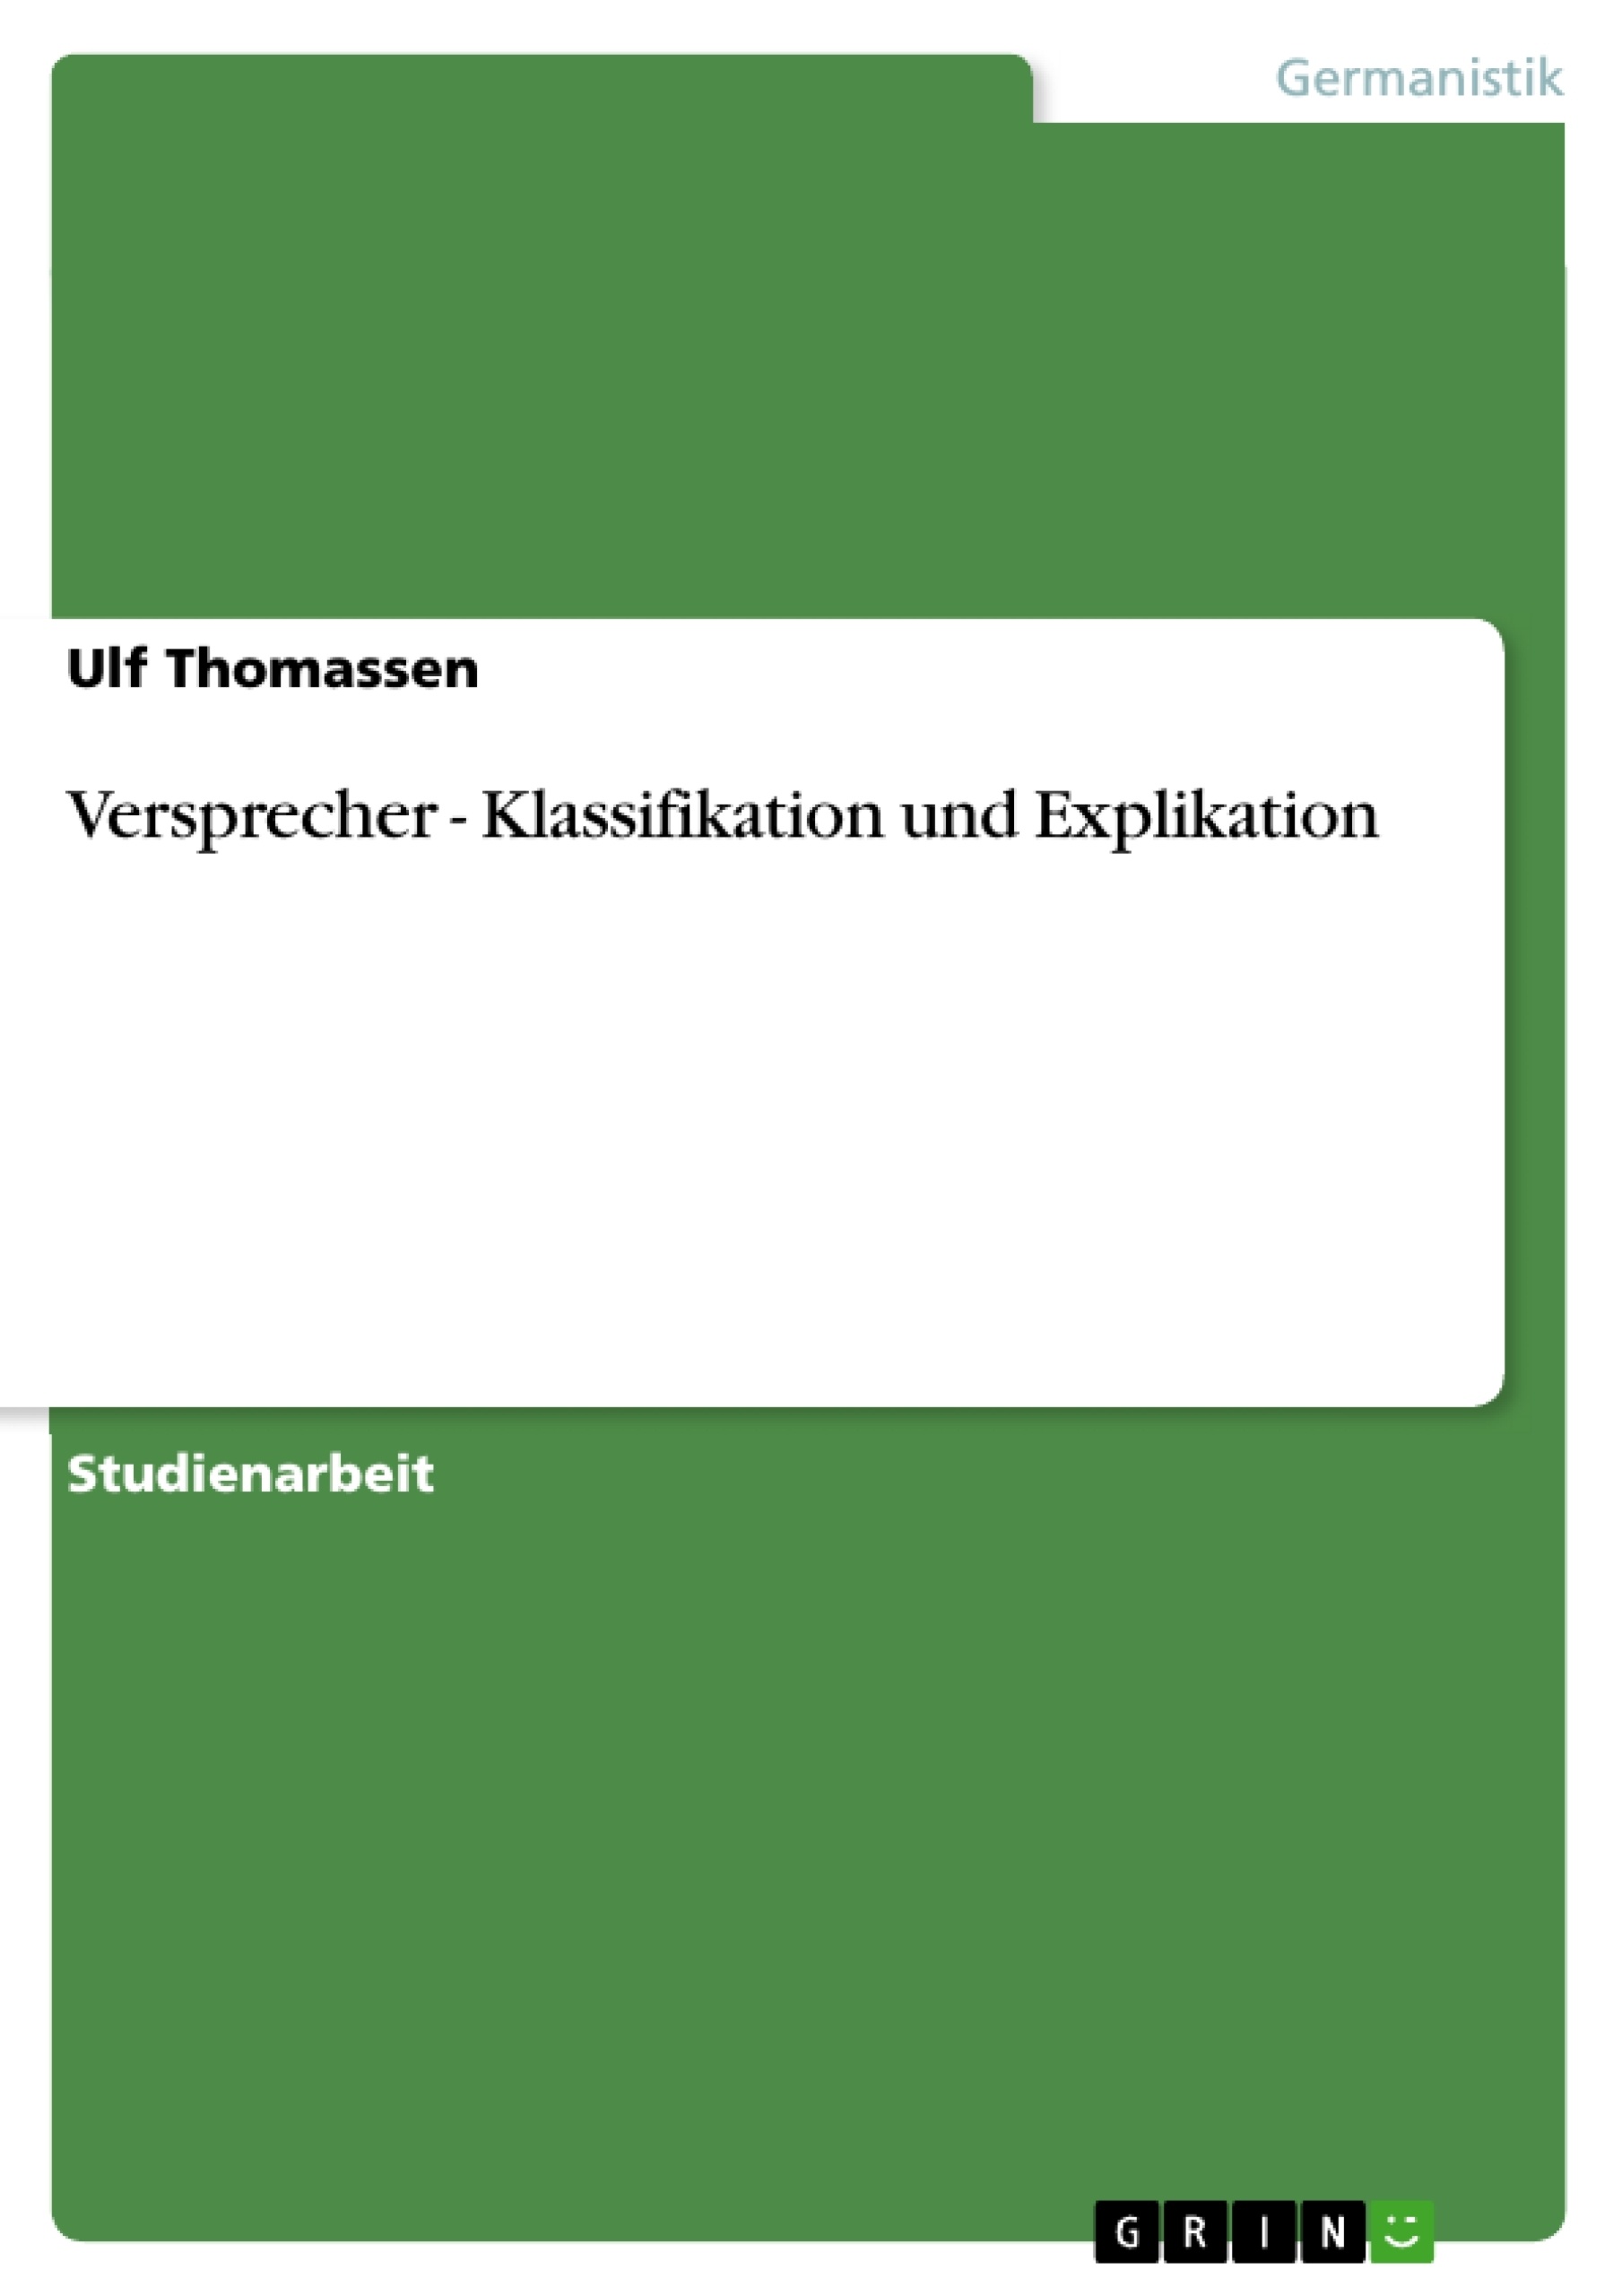 Título: Versprecher - Klassifikation und Explikation